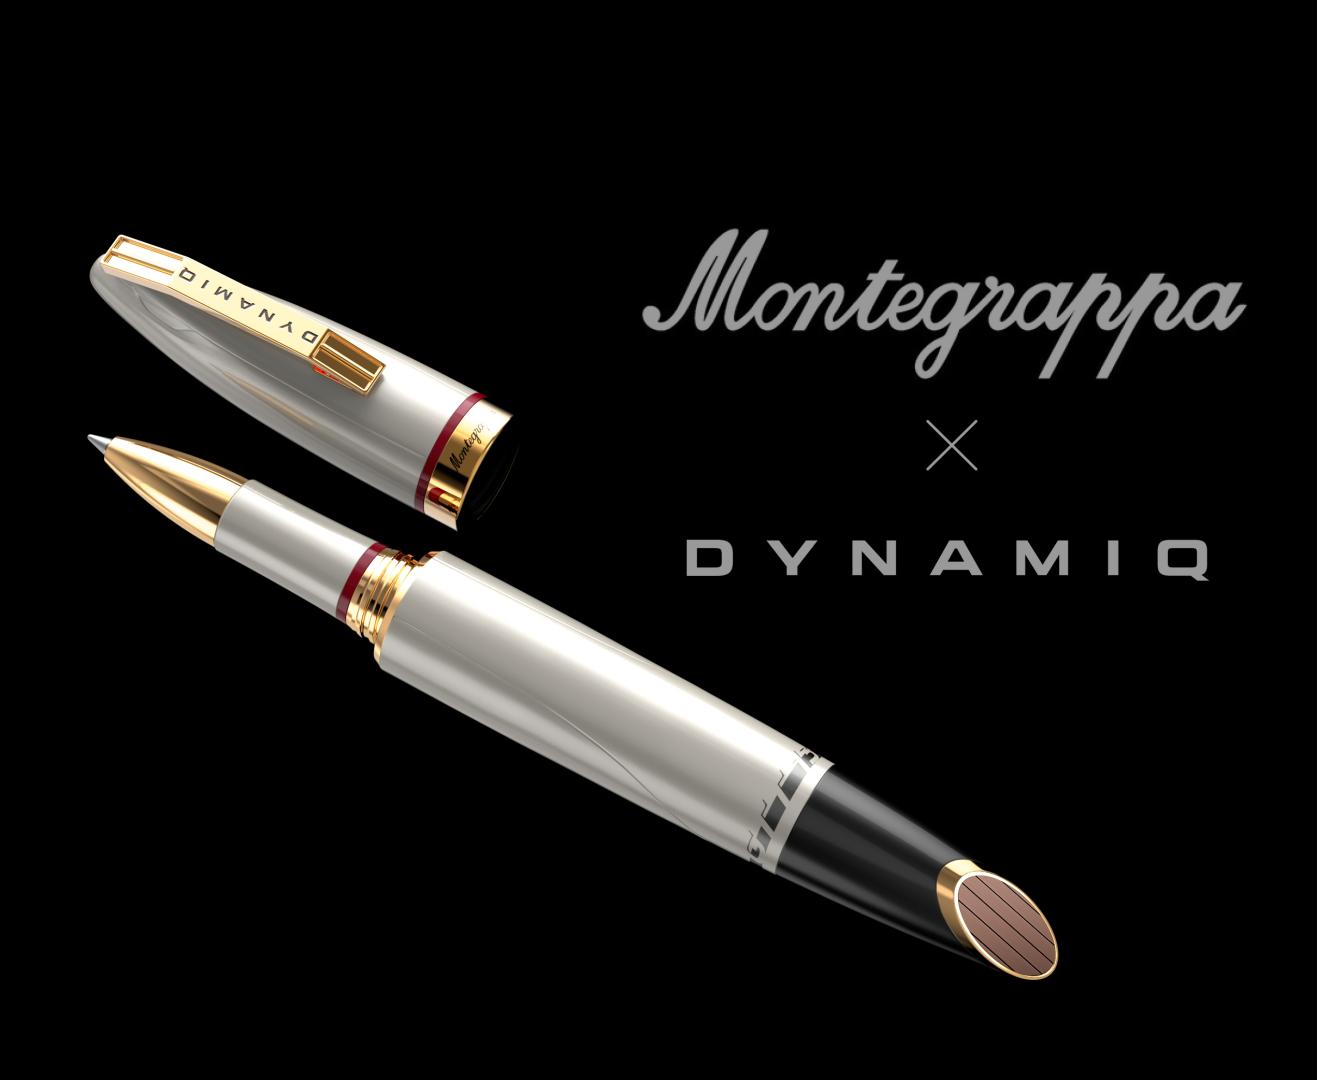 Dynamiq and Montegrappa 